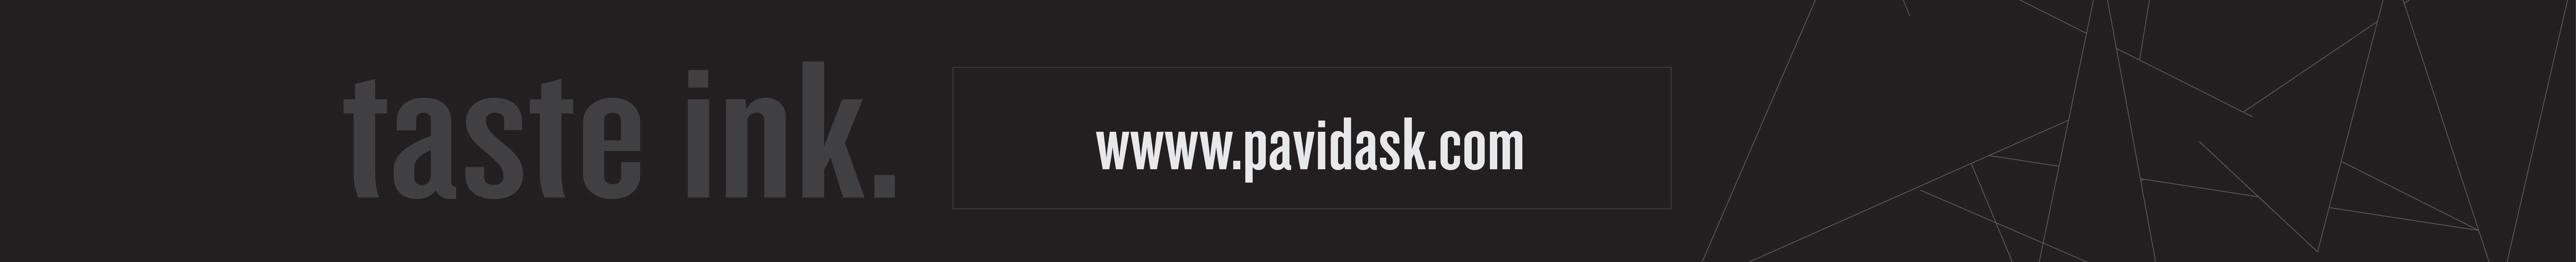 Pavidask .com's profile banner